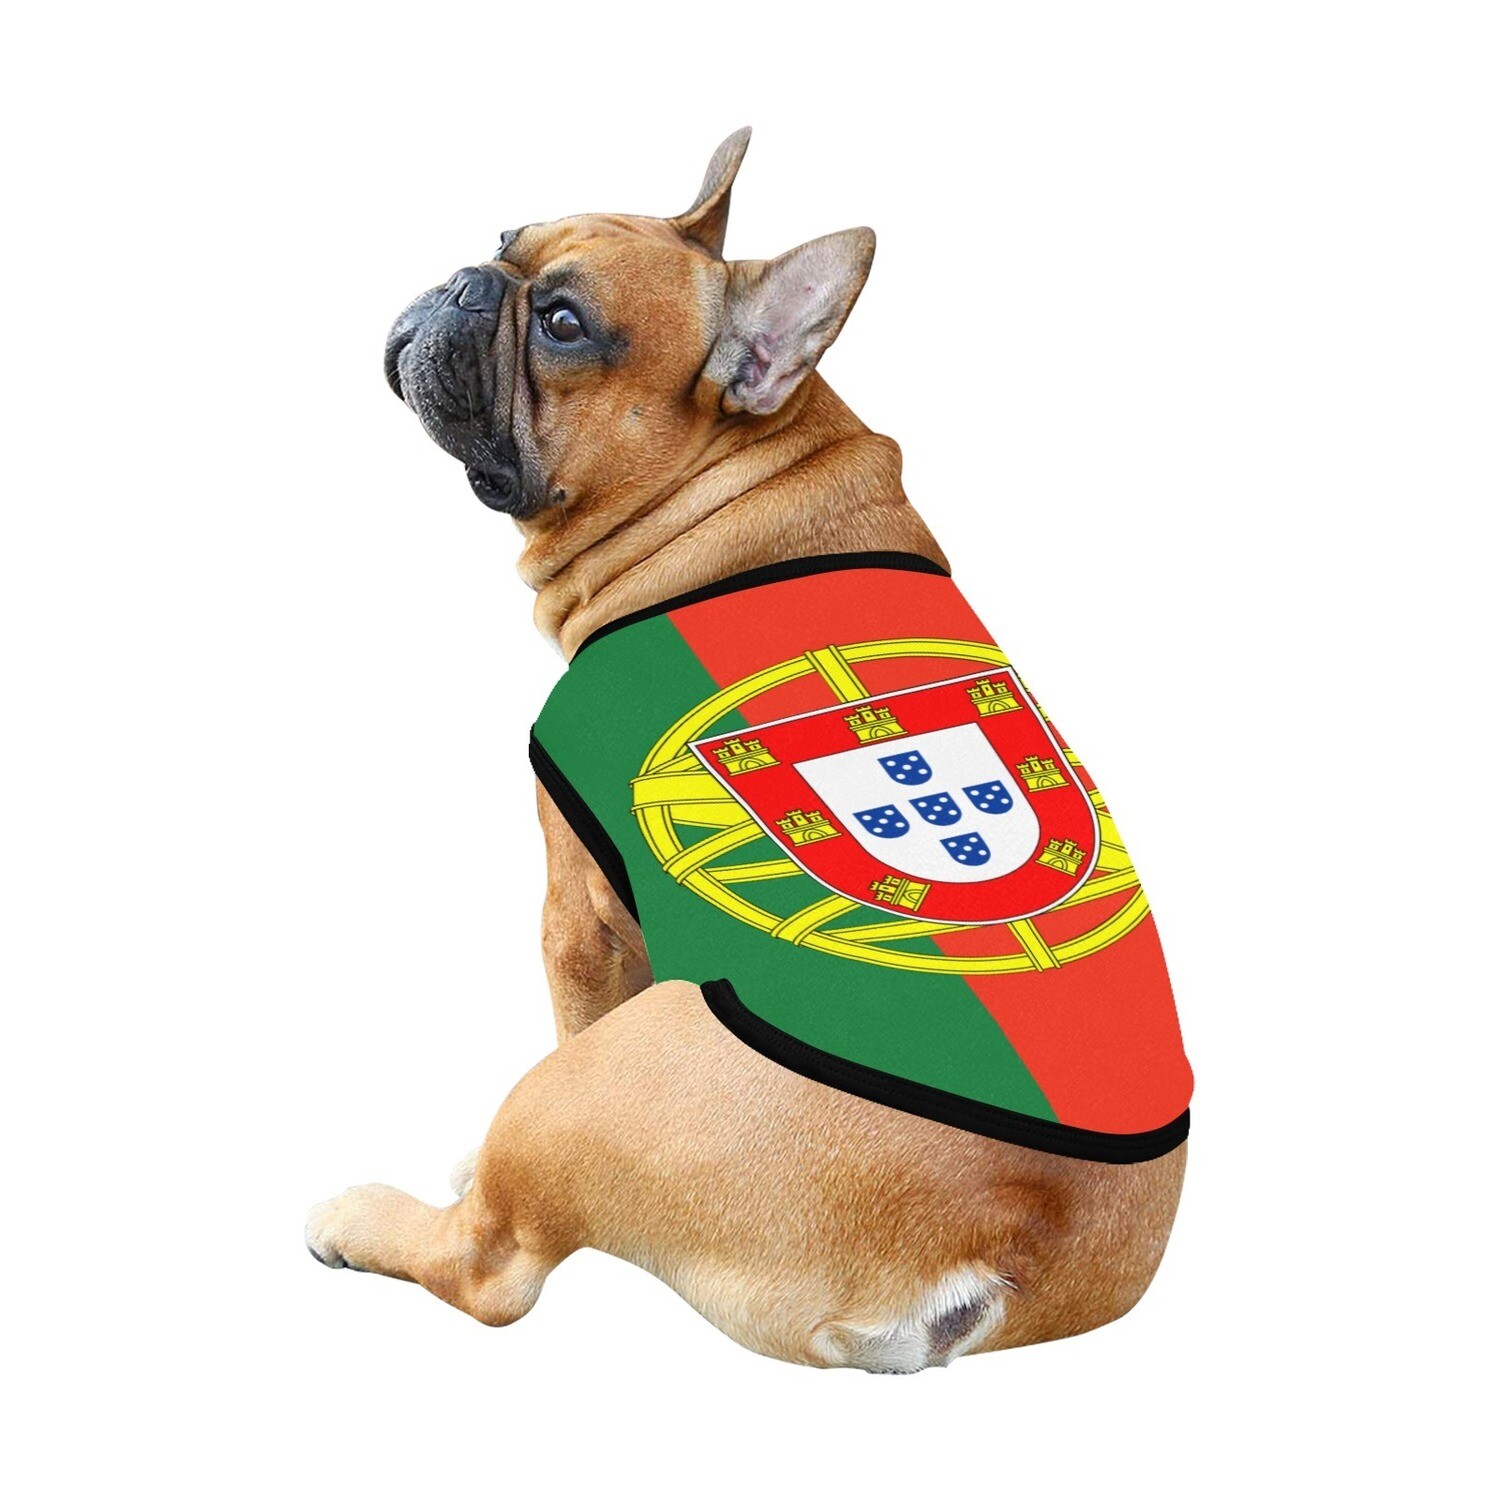 🐕🇵🇹 I love Portugal, Big Portuguese flag, dog t-shirt, dog gift, dog tank top, dog shirt, dog clothes, gift, 7 sizes XS to 3XL